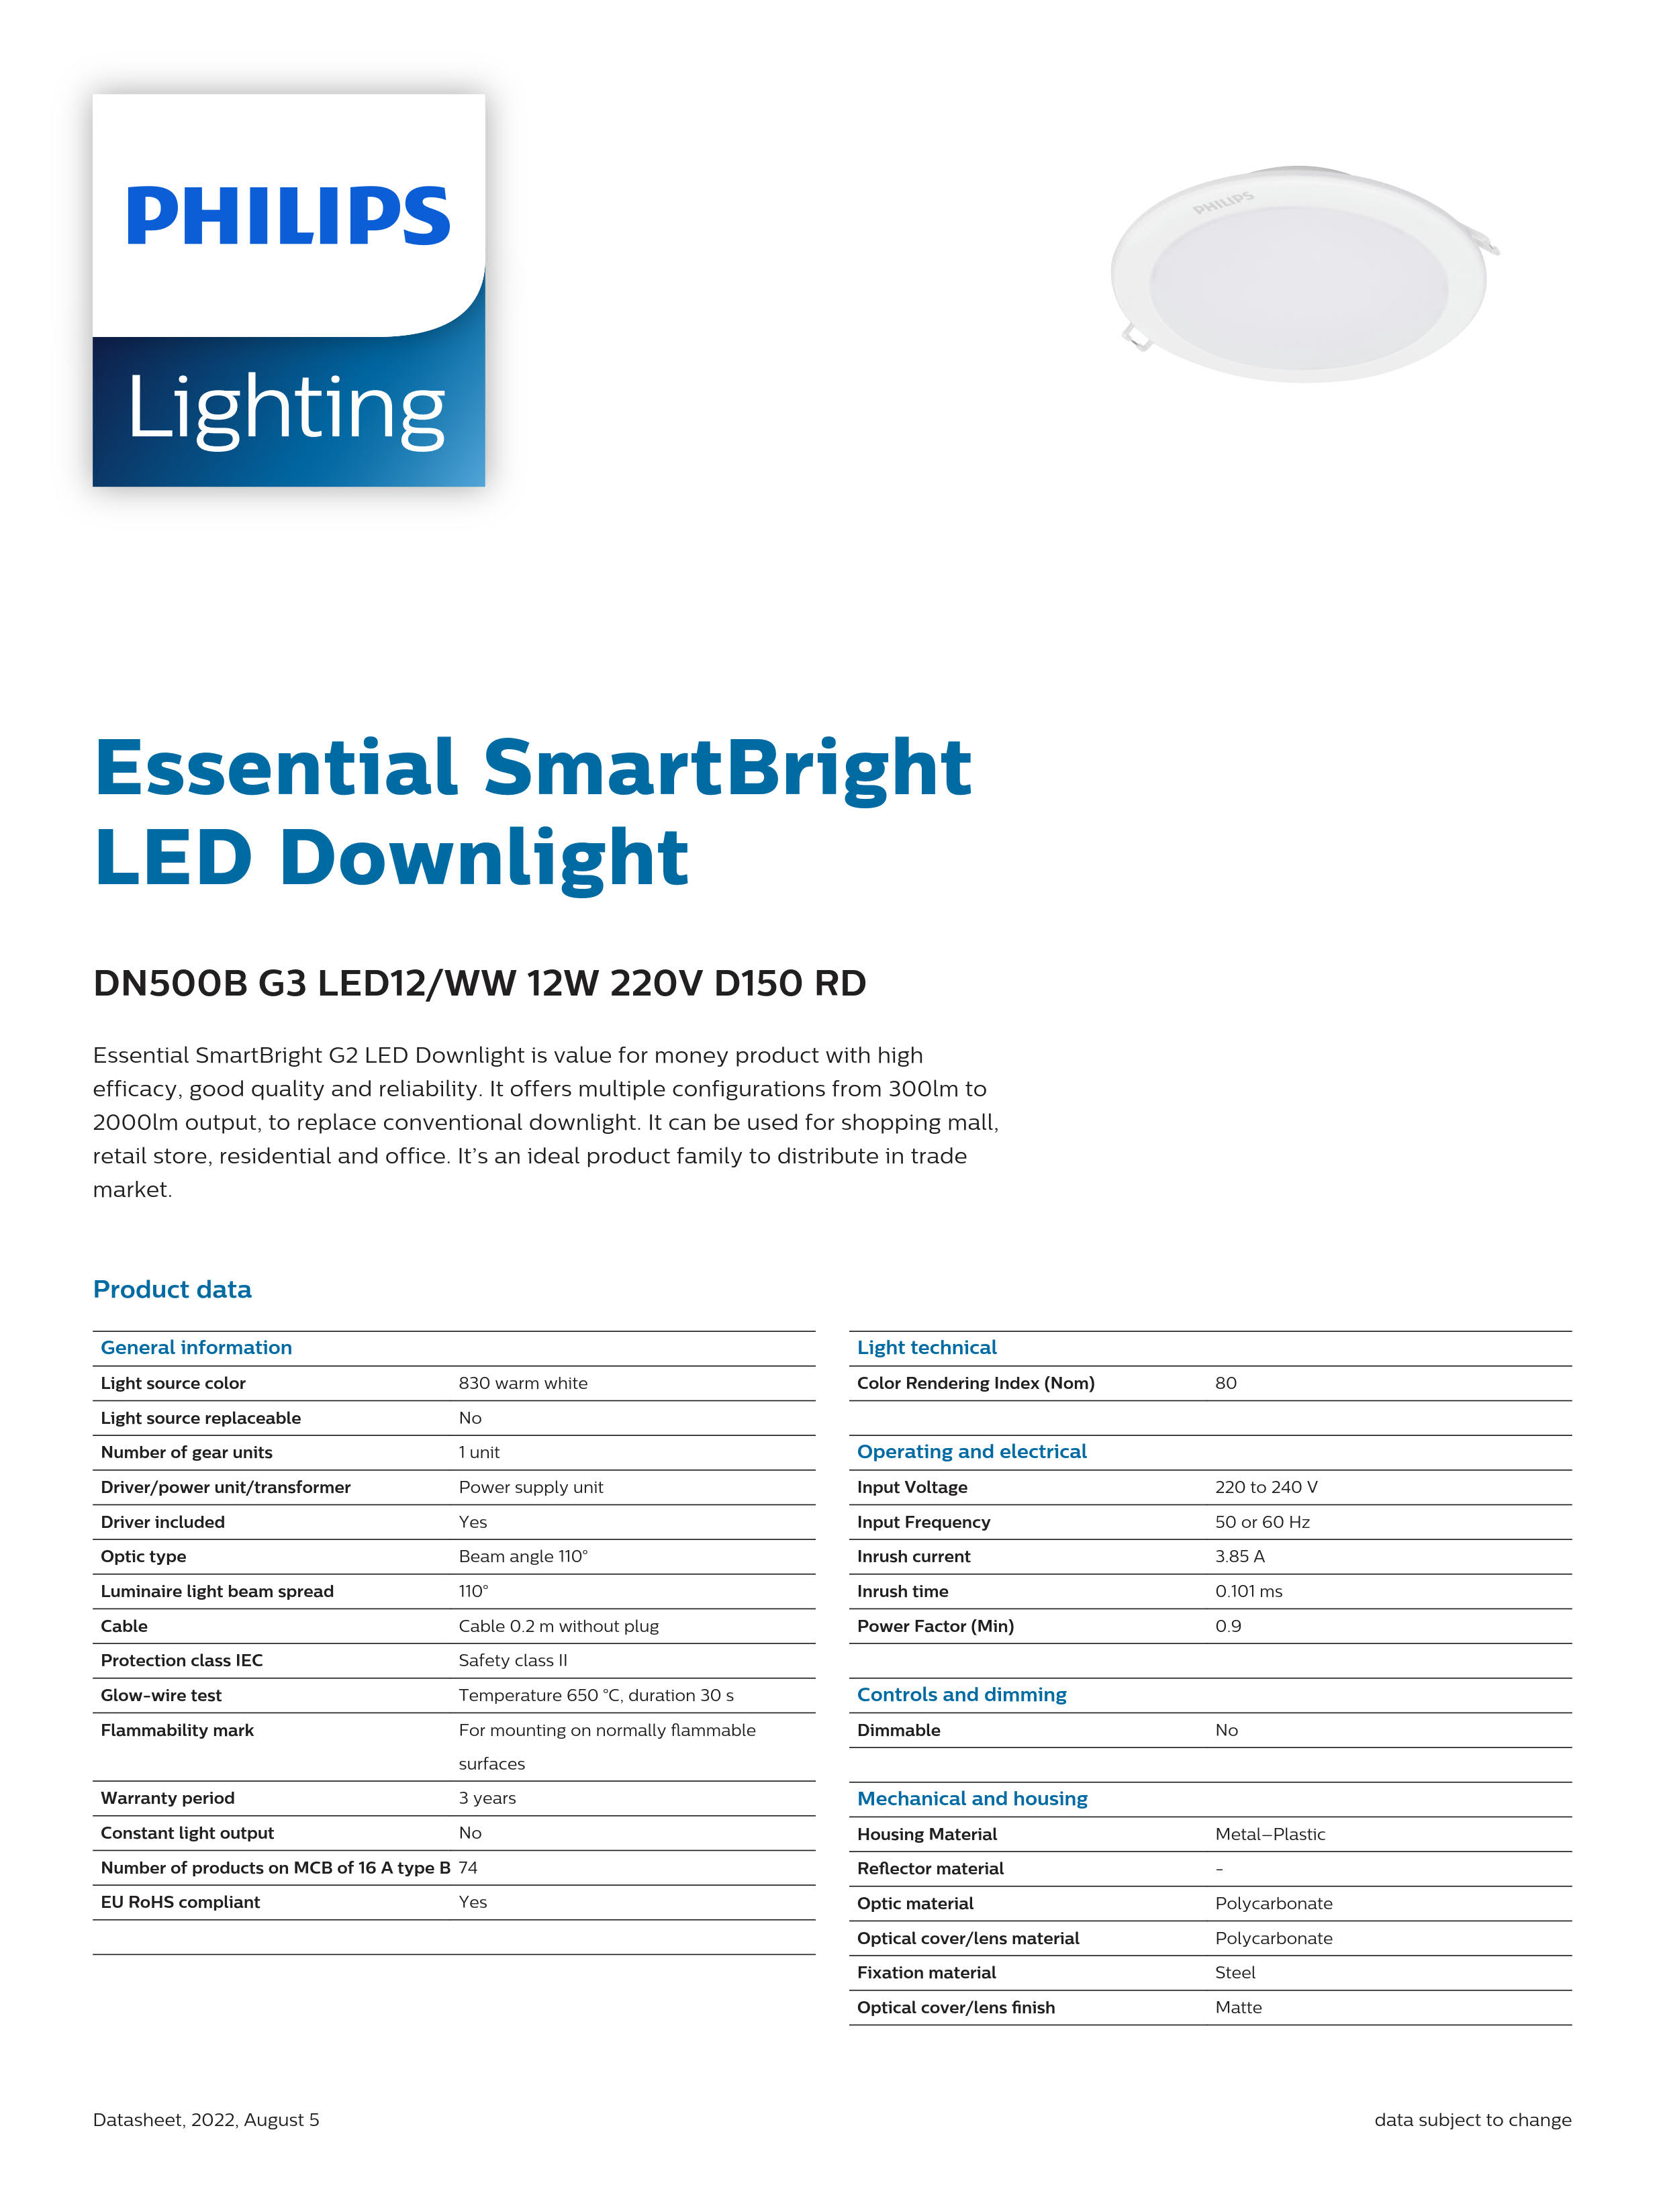 PHILIPS LED downlight DN500B G3 LED12/WW 13W 220V D150 RD 929002677540